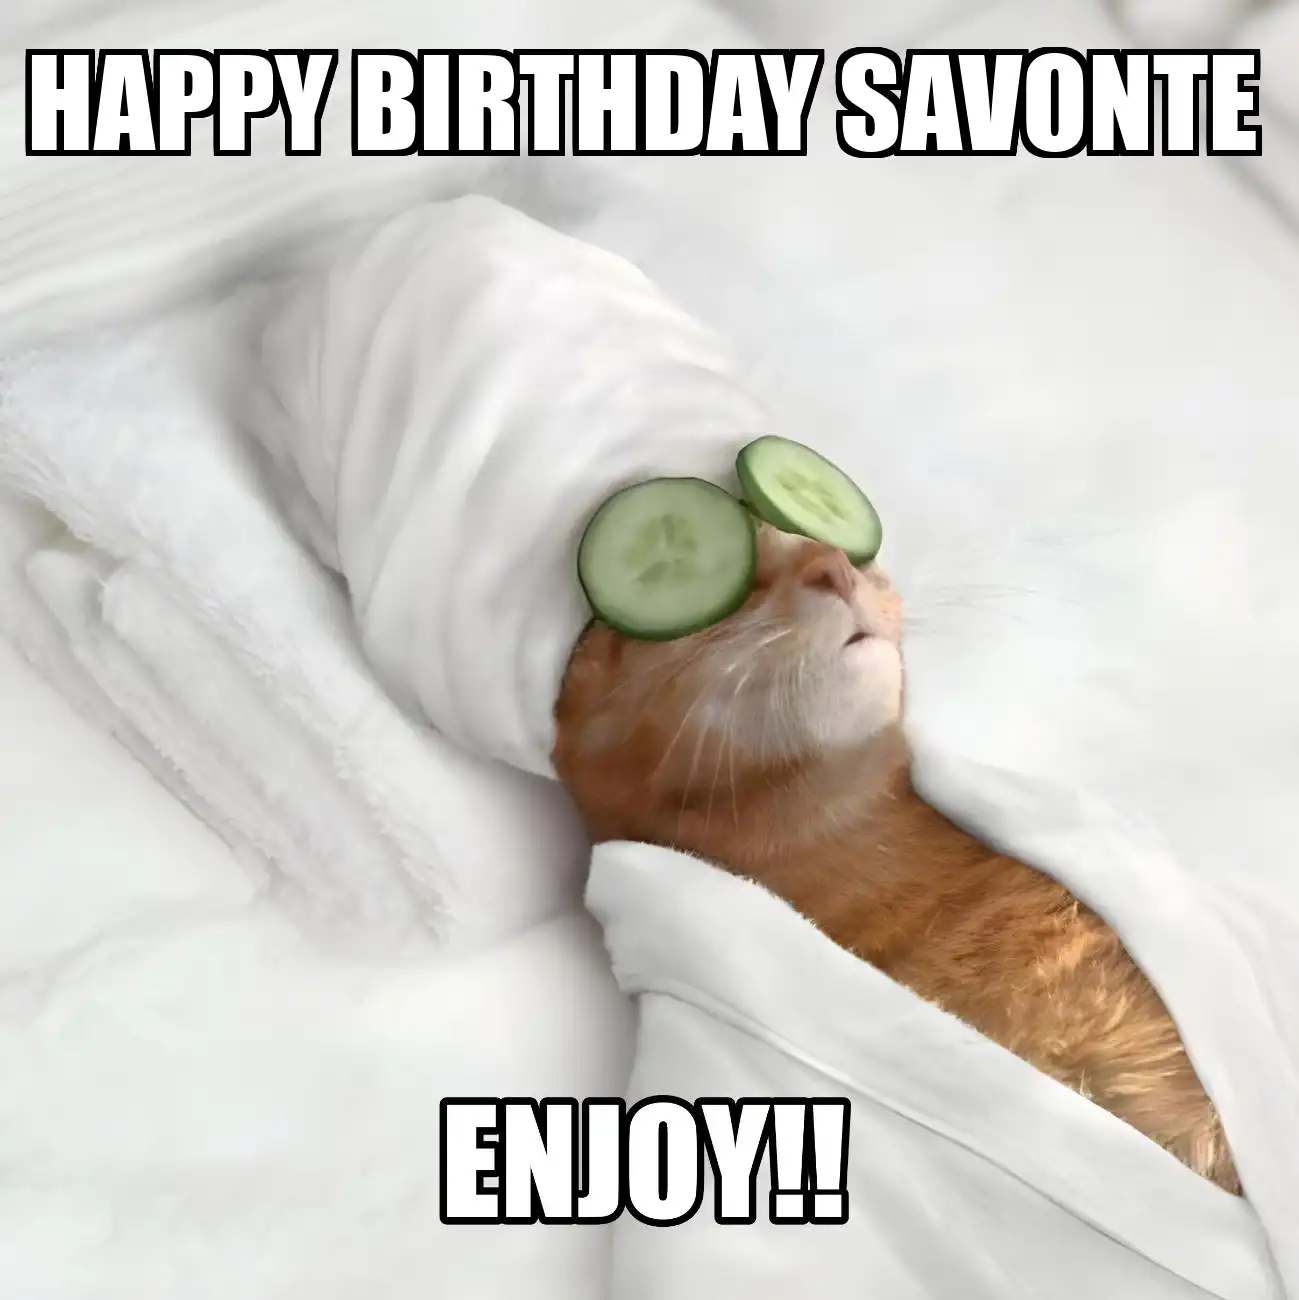 Happy Birthday Savonte Enjoy Cat Meme